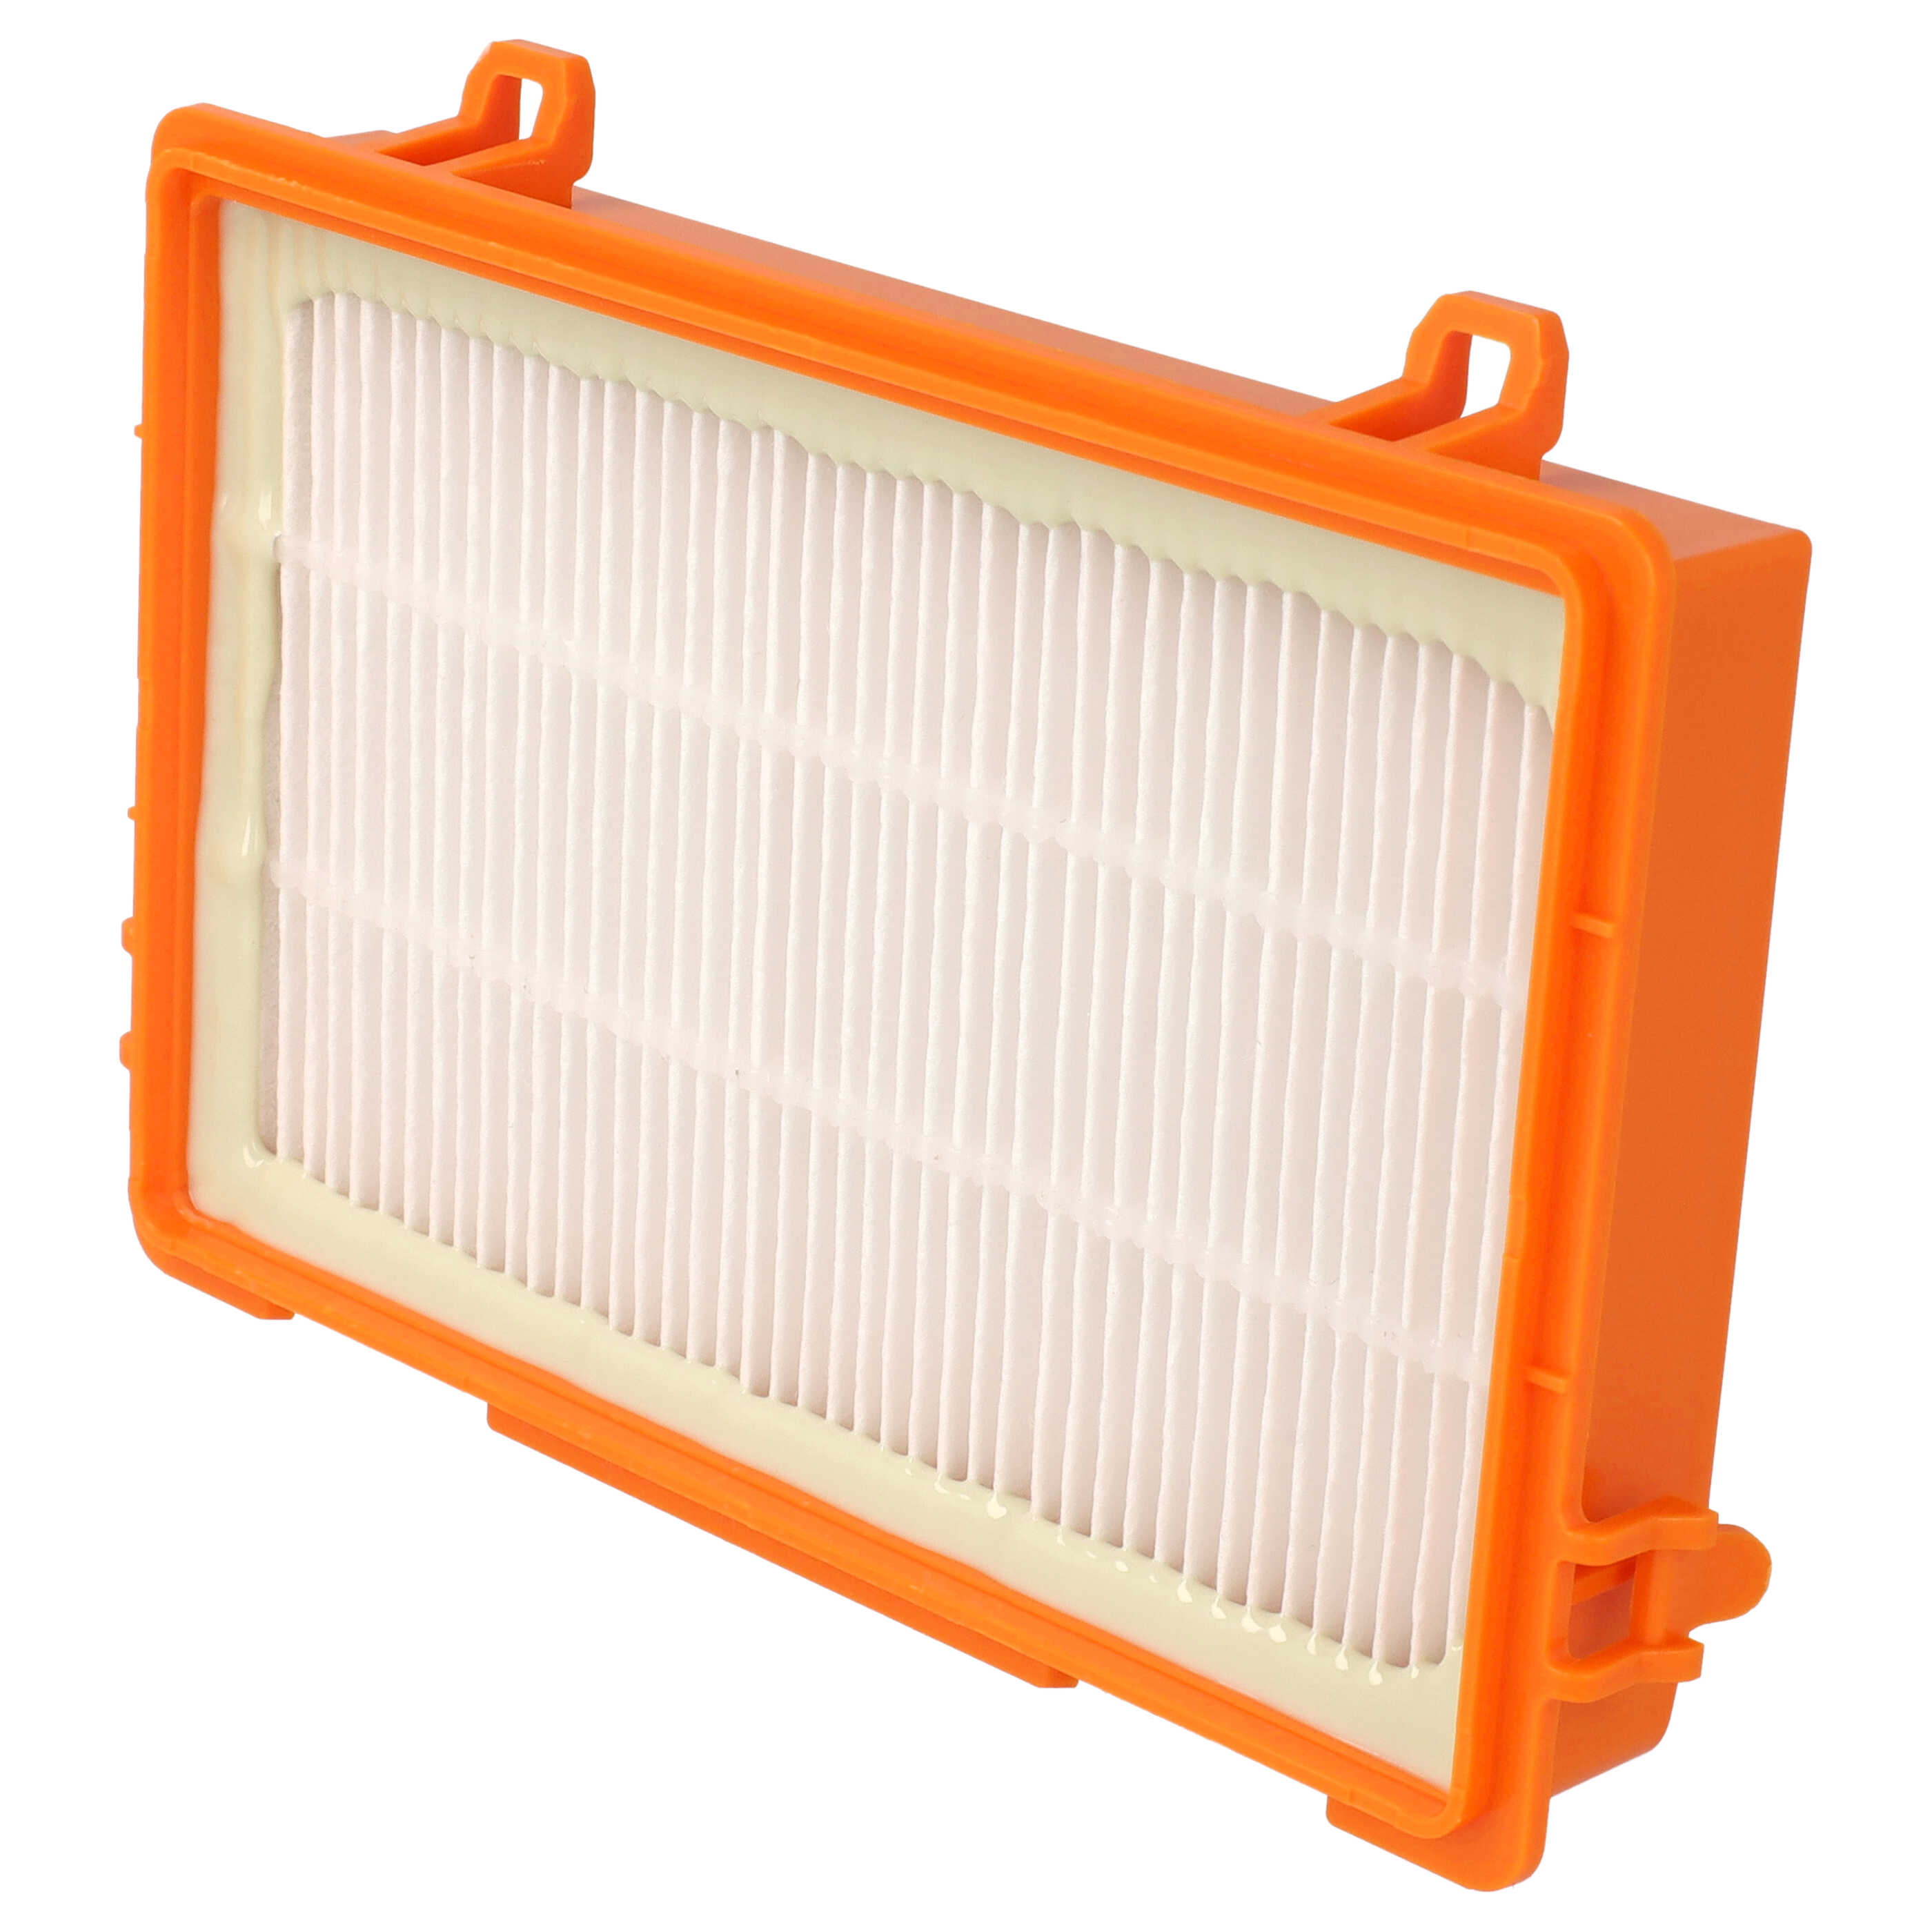 Filtro reemplaza Thomas 787251 para aspiradora - filtro Hepa naranja / blanco